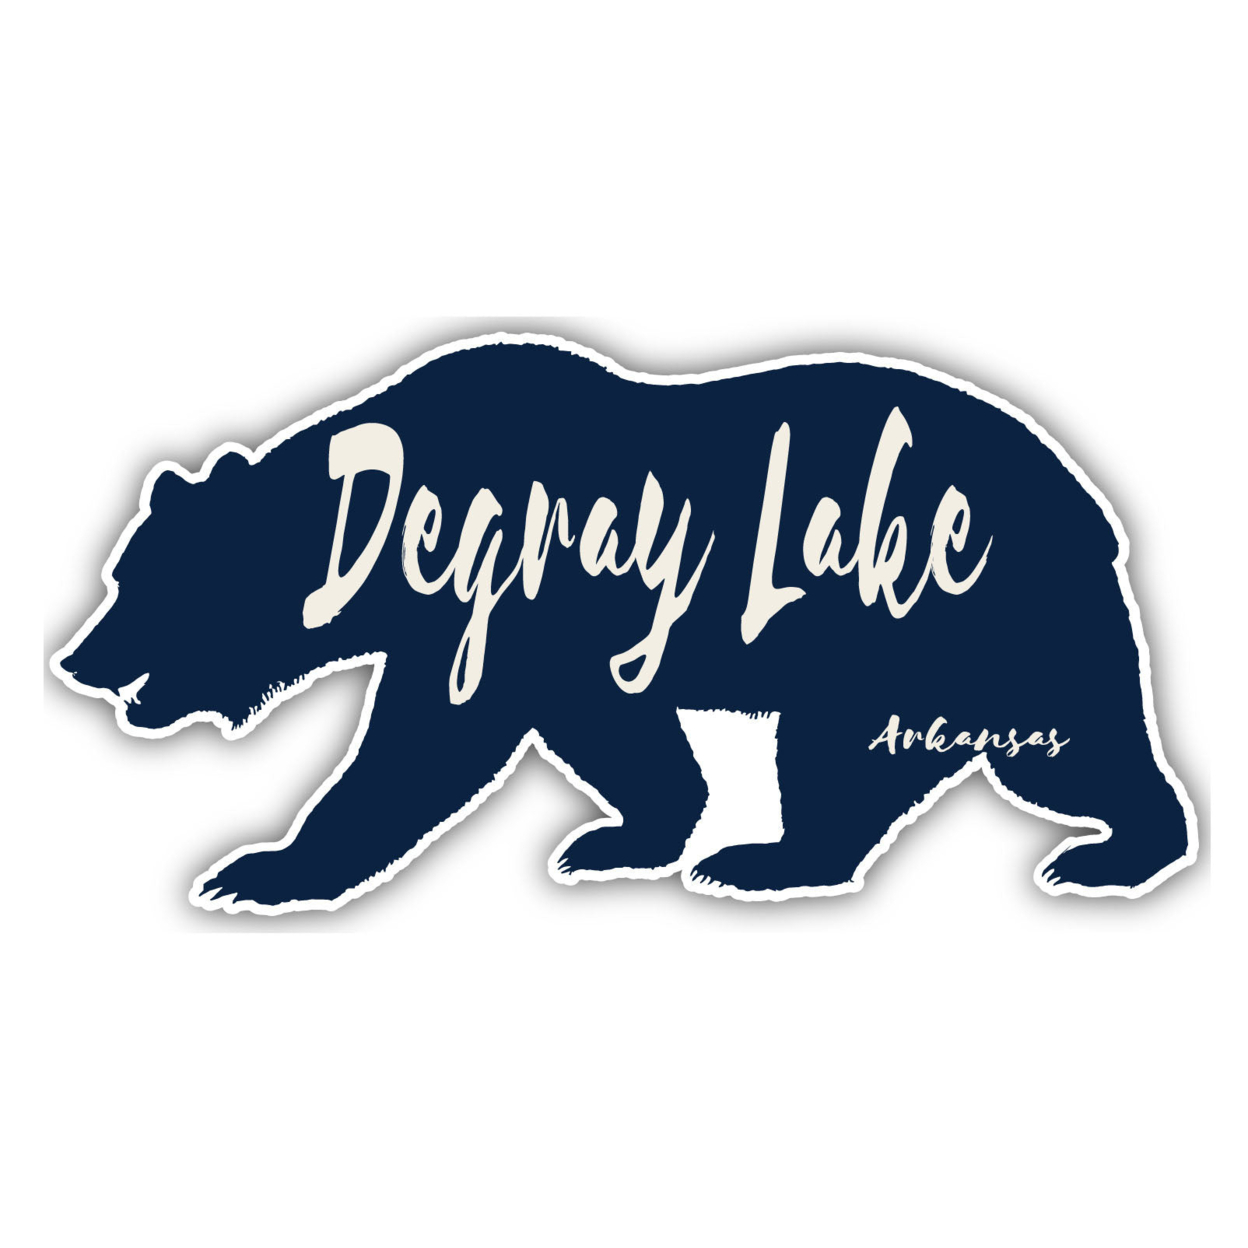 DeGray Lake Arkansas Souvenir Decorative Stickers (Choose Theme And Size) - Single Unit, 12-Inch, Tent